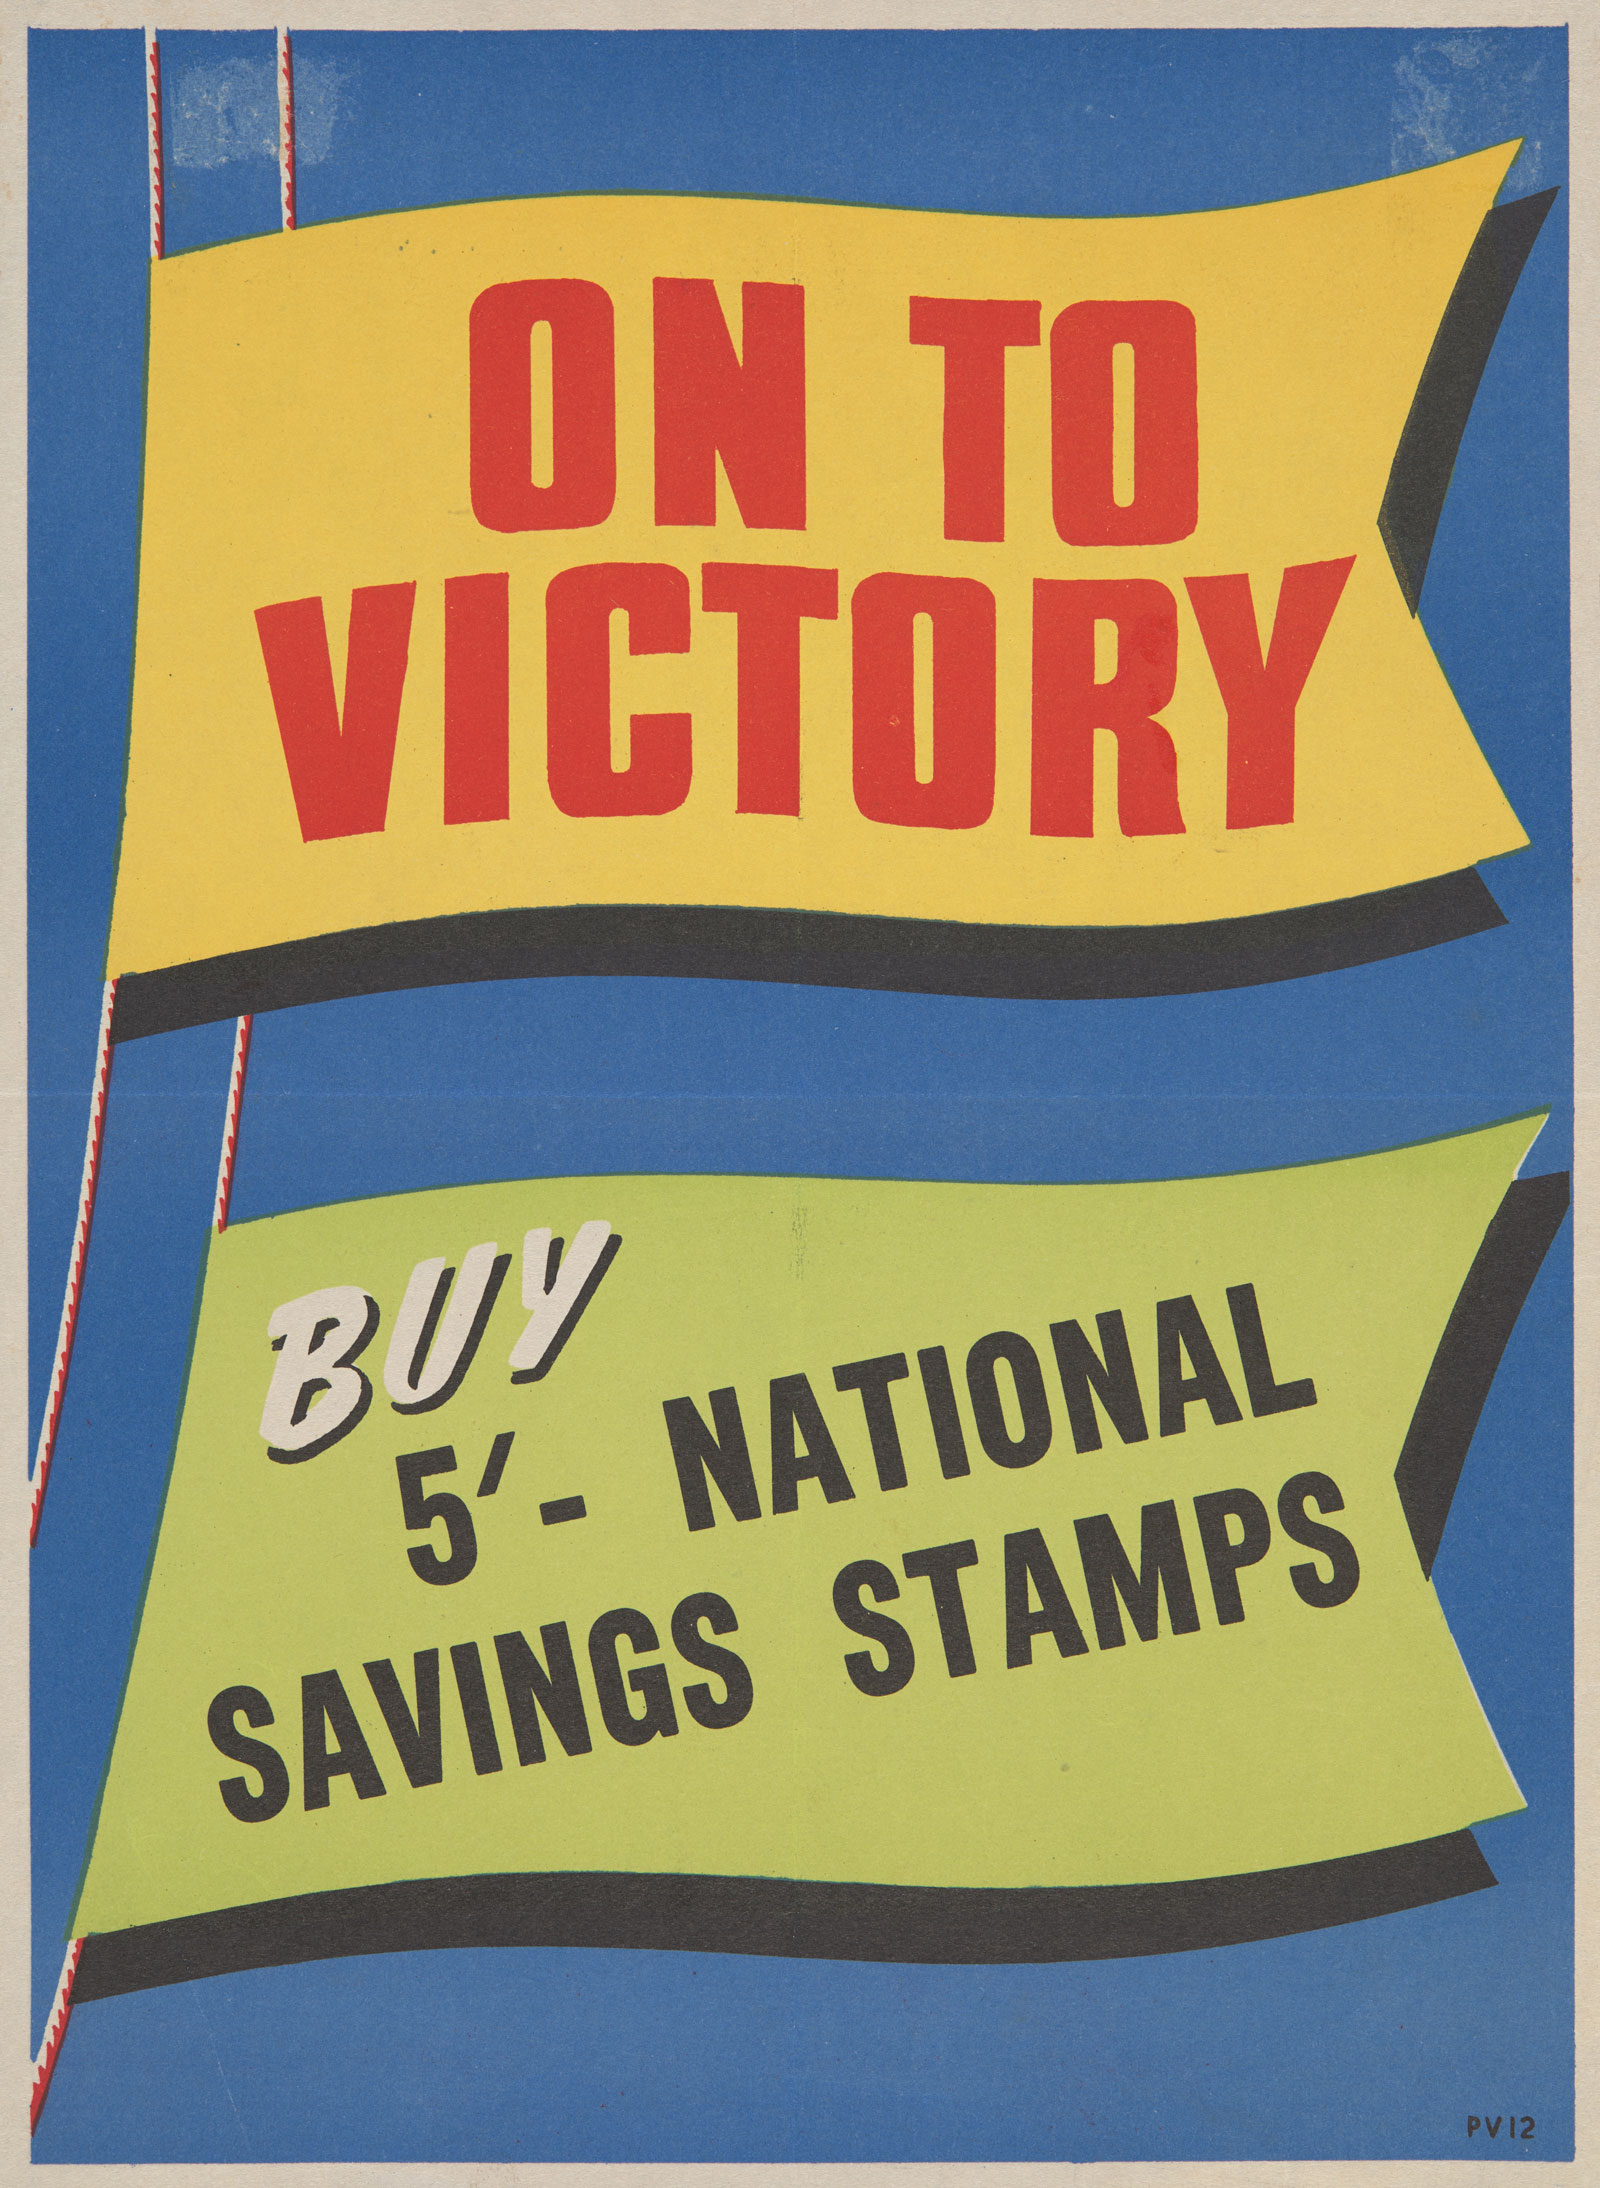 National savings stamps poster.